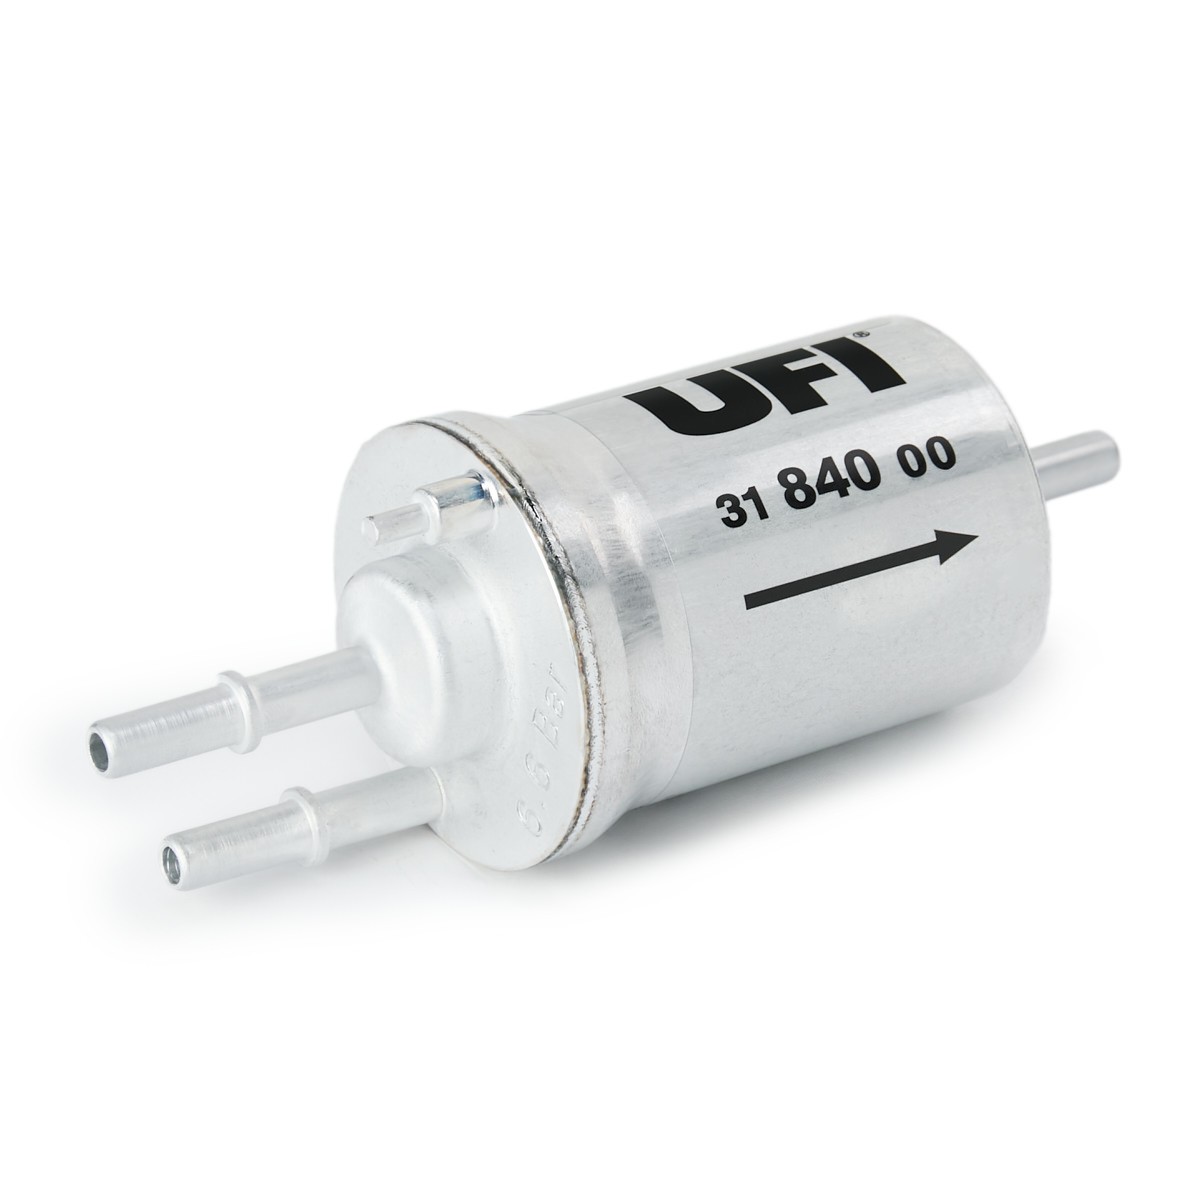 UFI 31.840.00 Skoda ROOMSTER 2013 Inline fuel filter